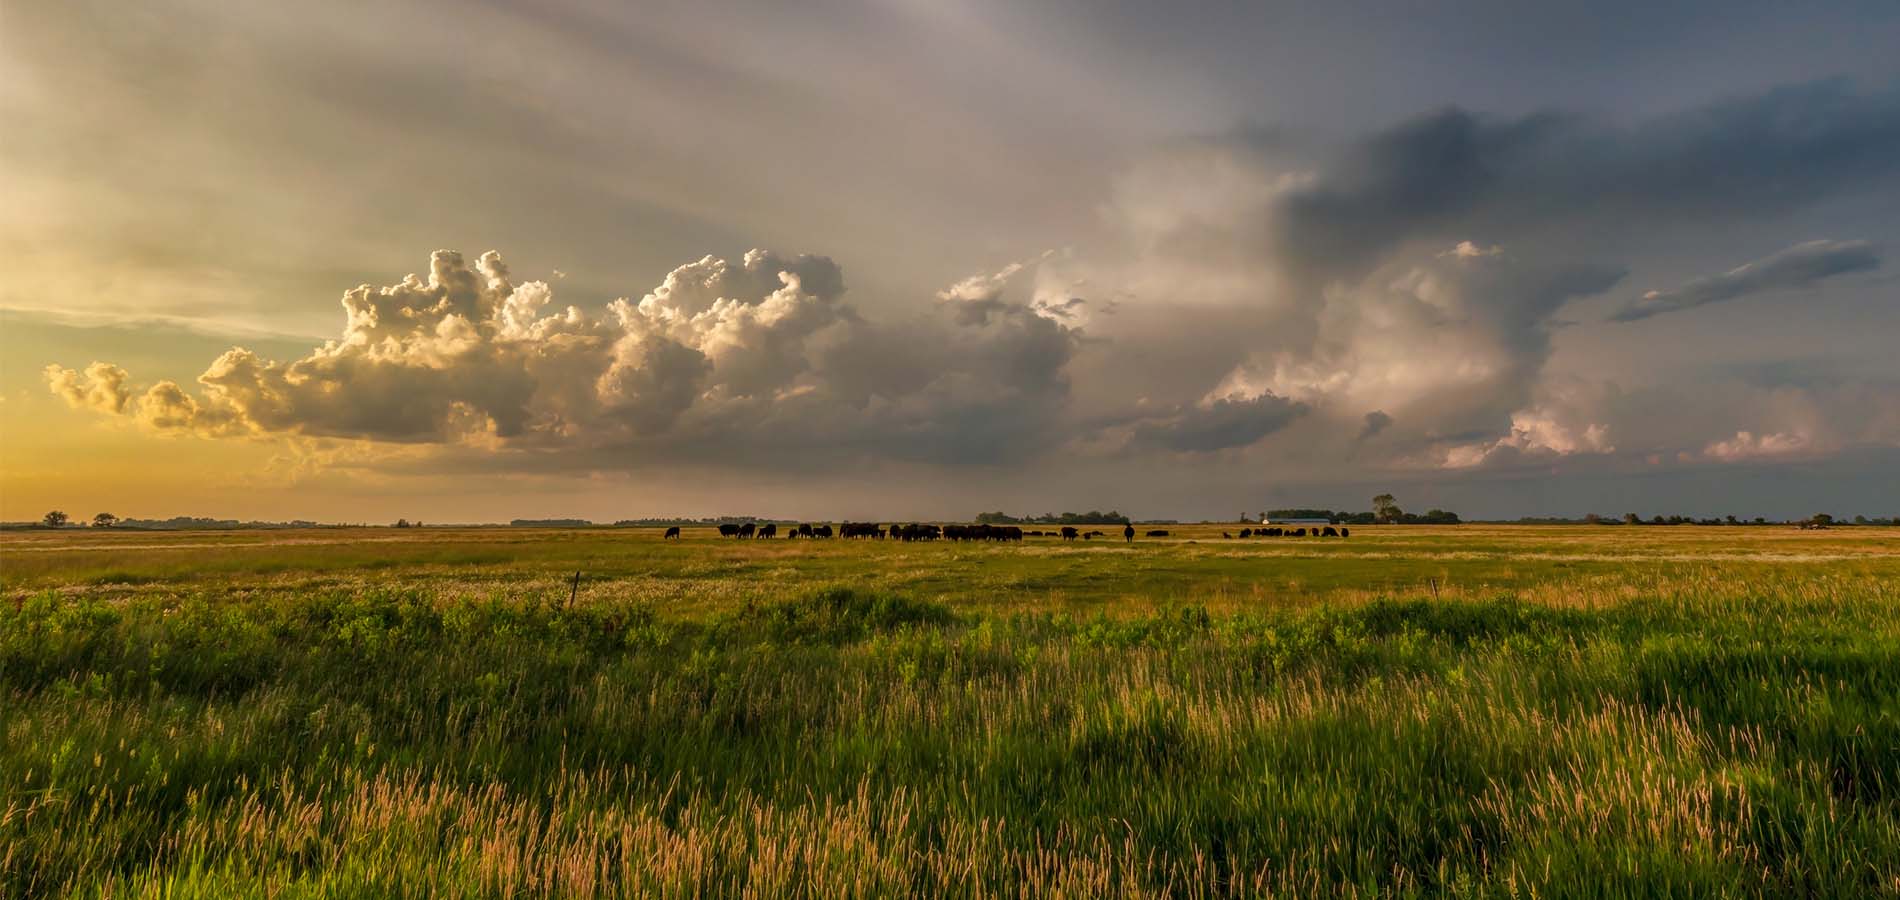 Cattle grazing on green grass under a stormy sky